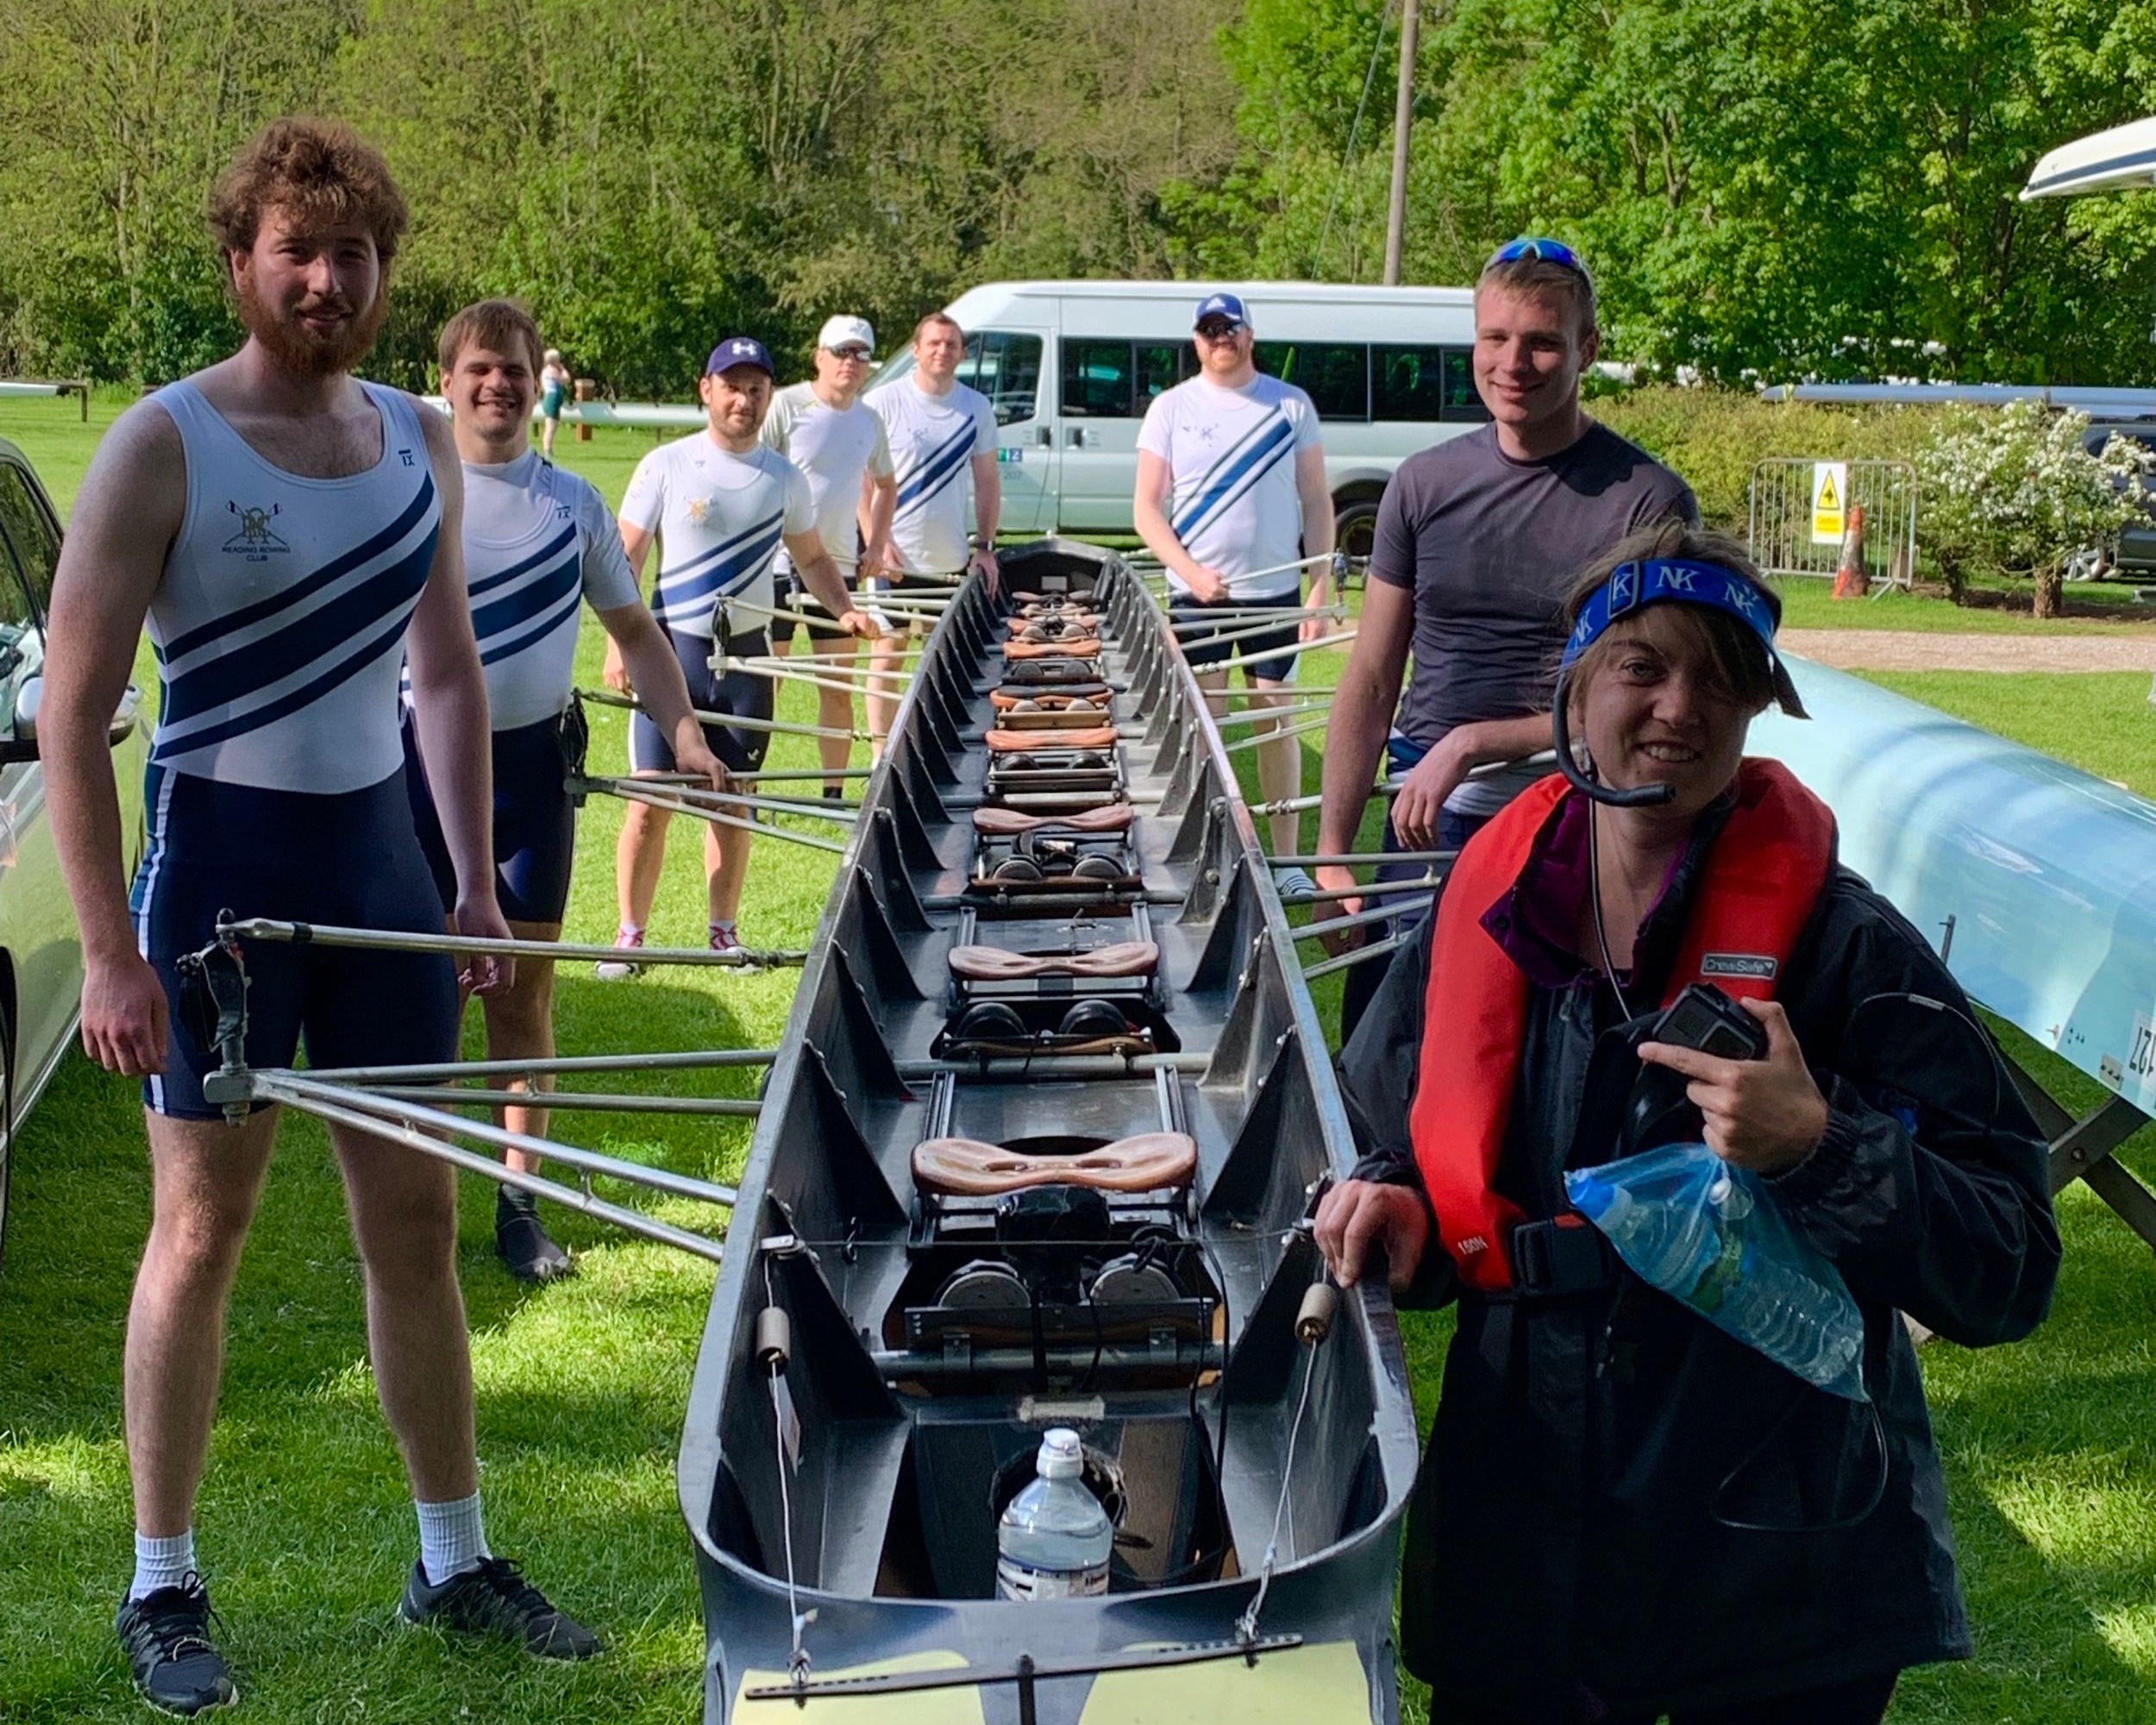 Team ladies warwick strip set rowing off to universitys Women’s Rowing